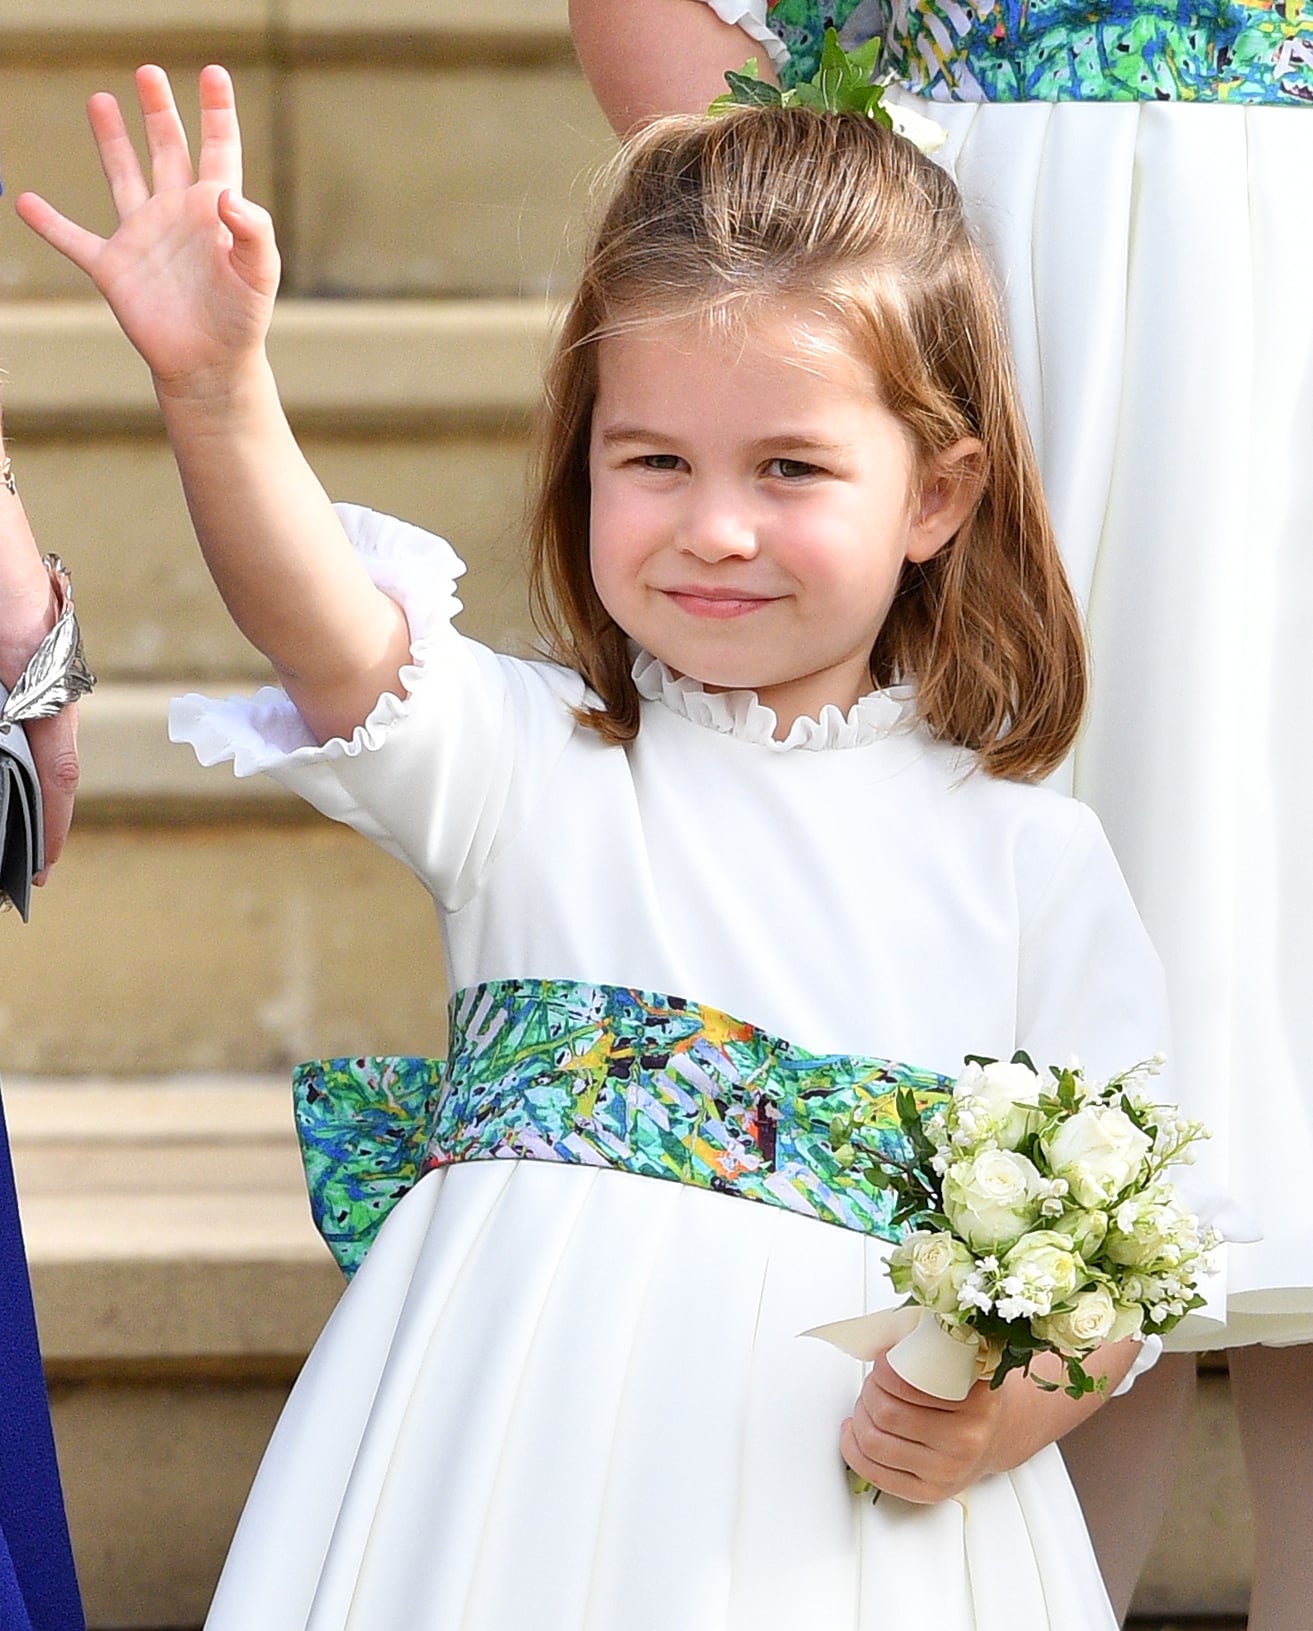 What Will Princess Charlotte's Duties Be? | POPSUGAR Celebrity Australia